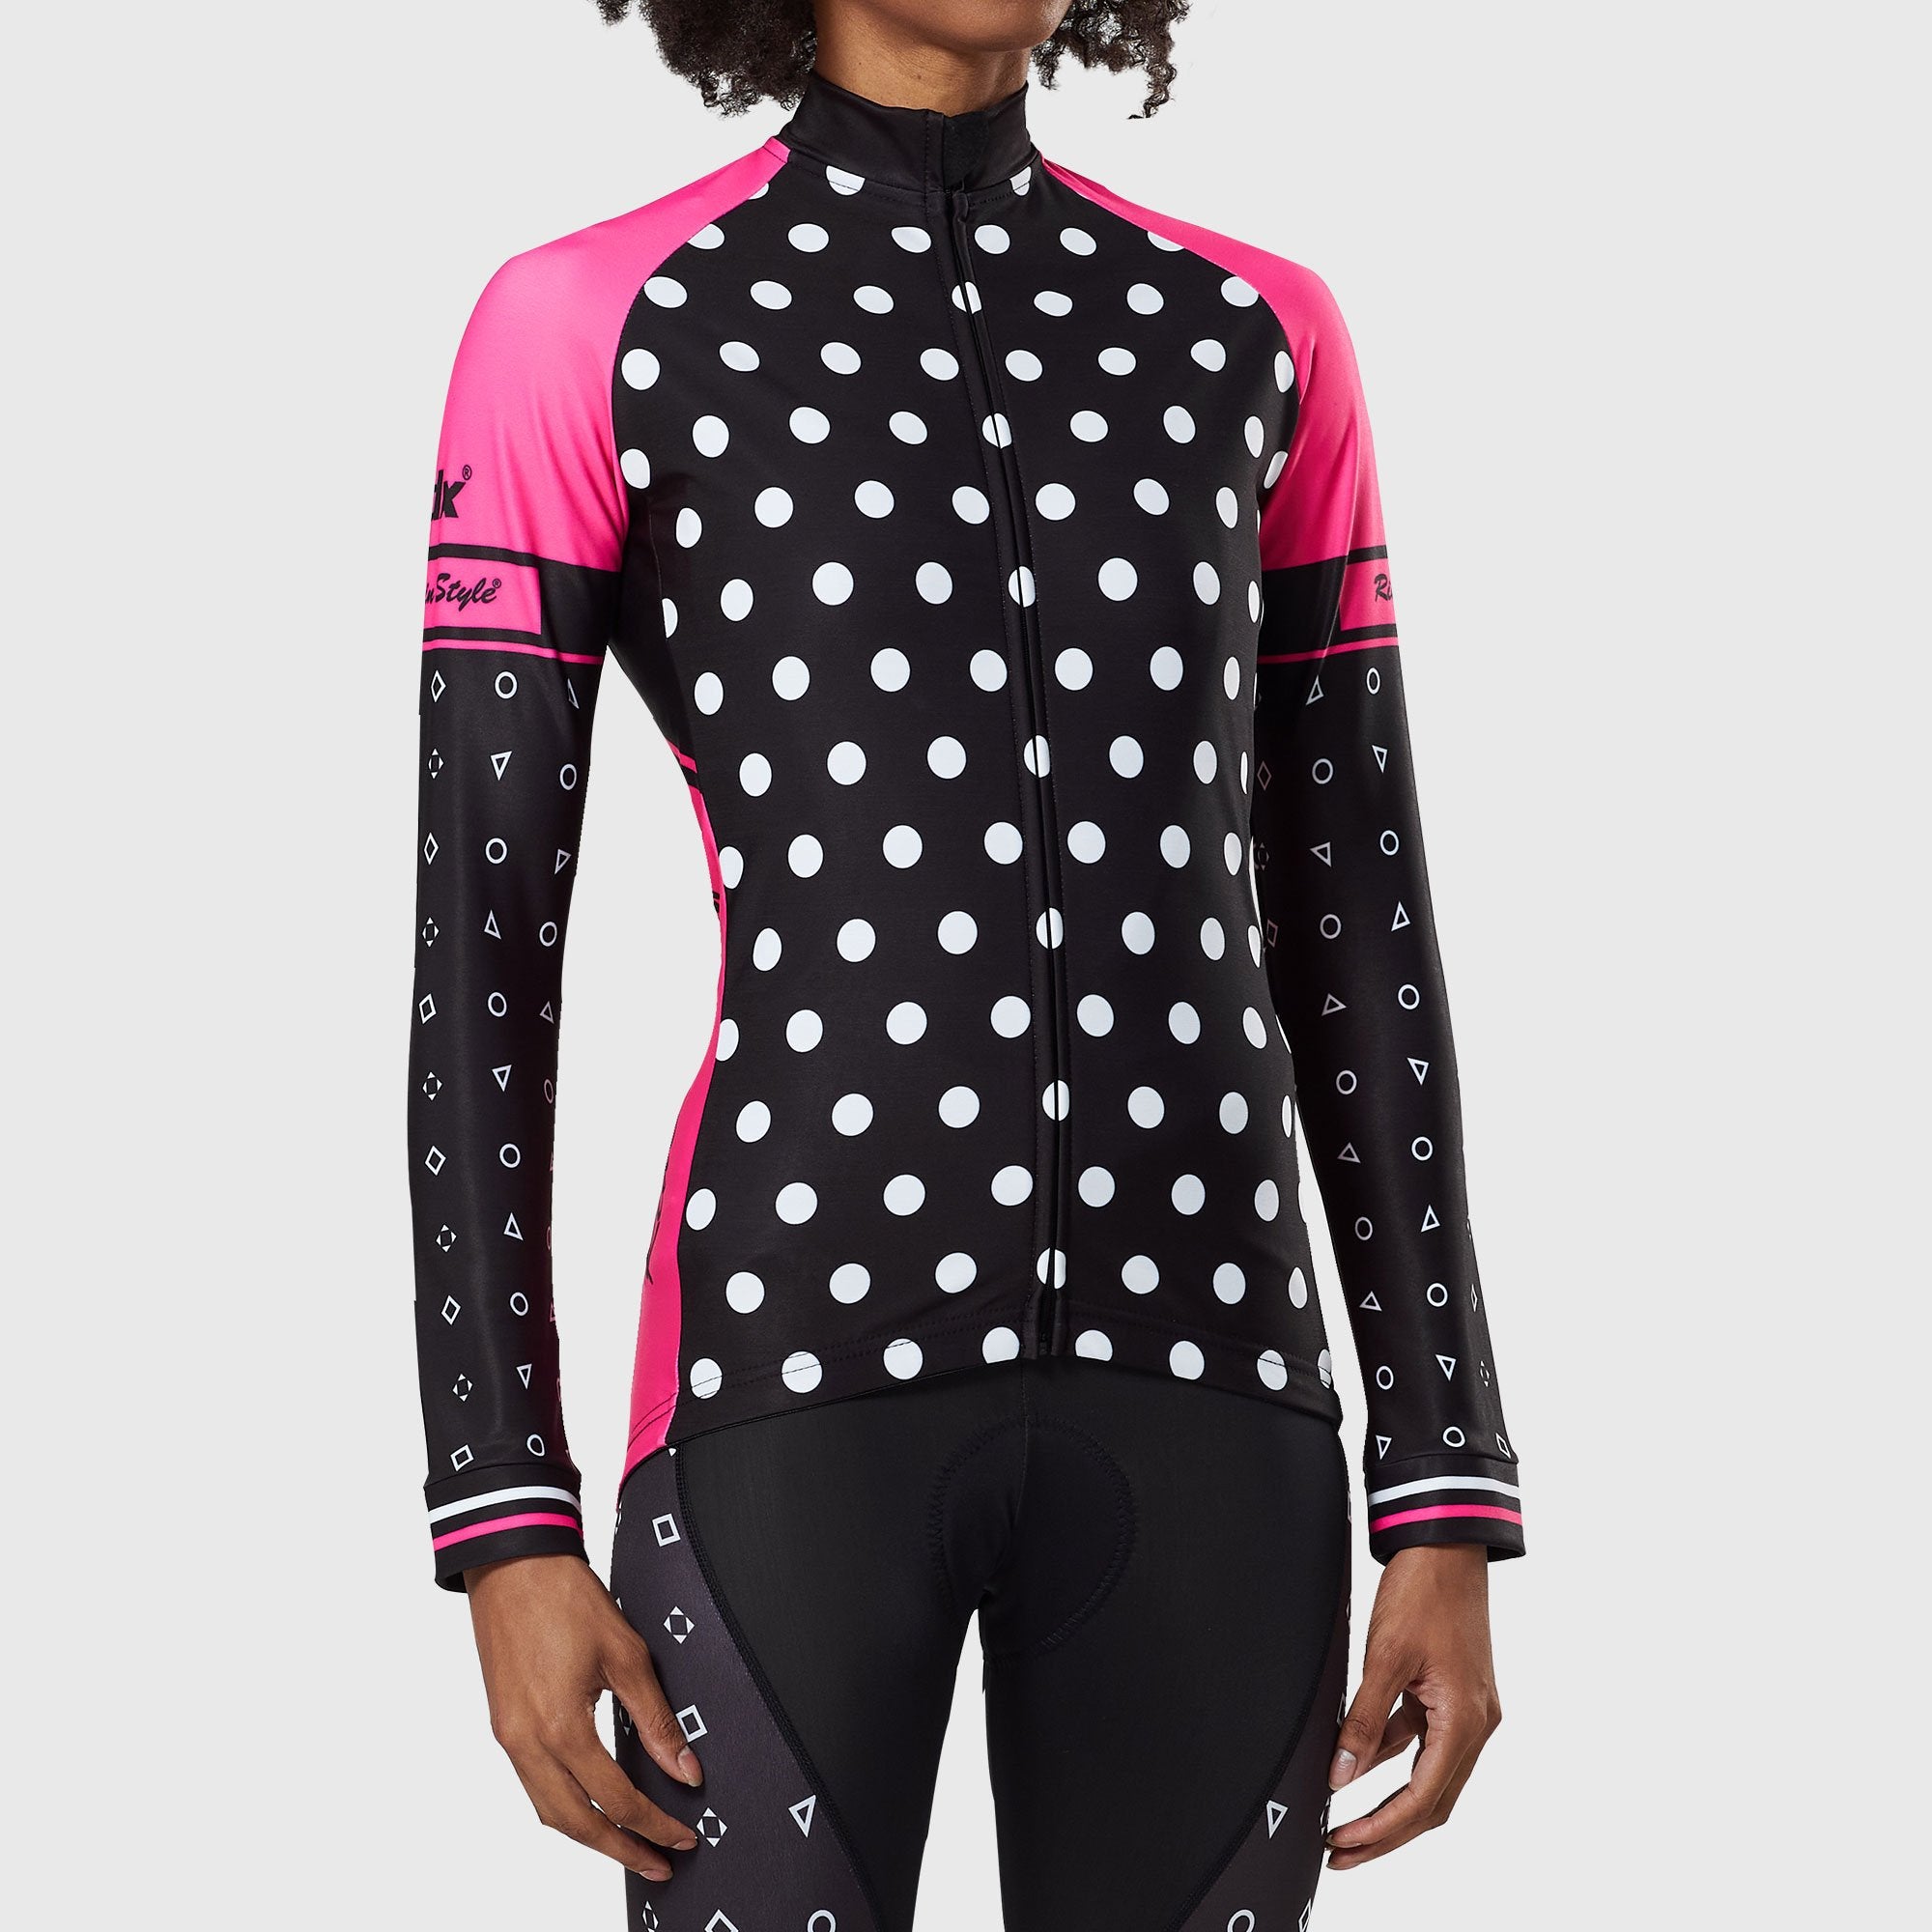 Fdx Polka Dots Women's Long Sleeve Winter Cycling Jersey Pink & Blue